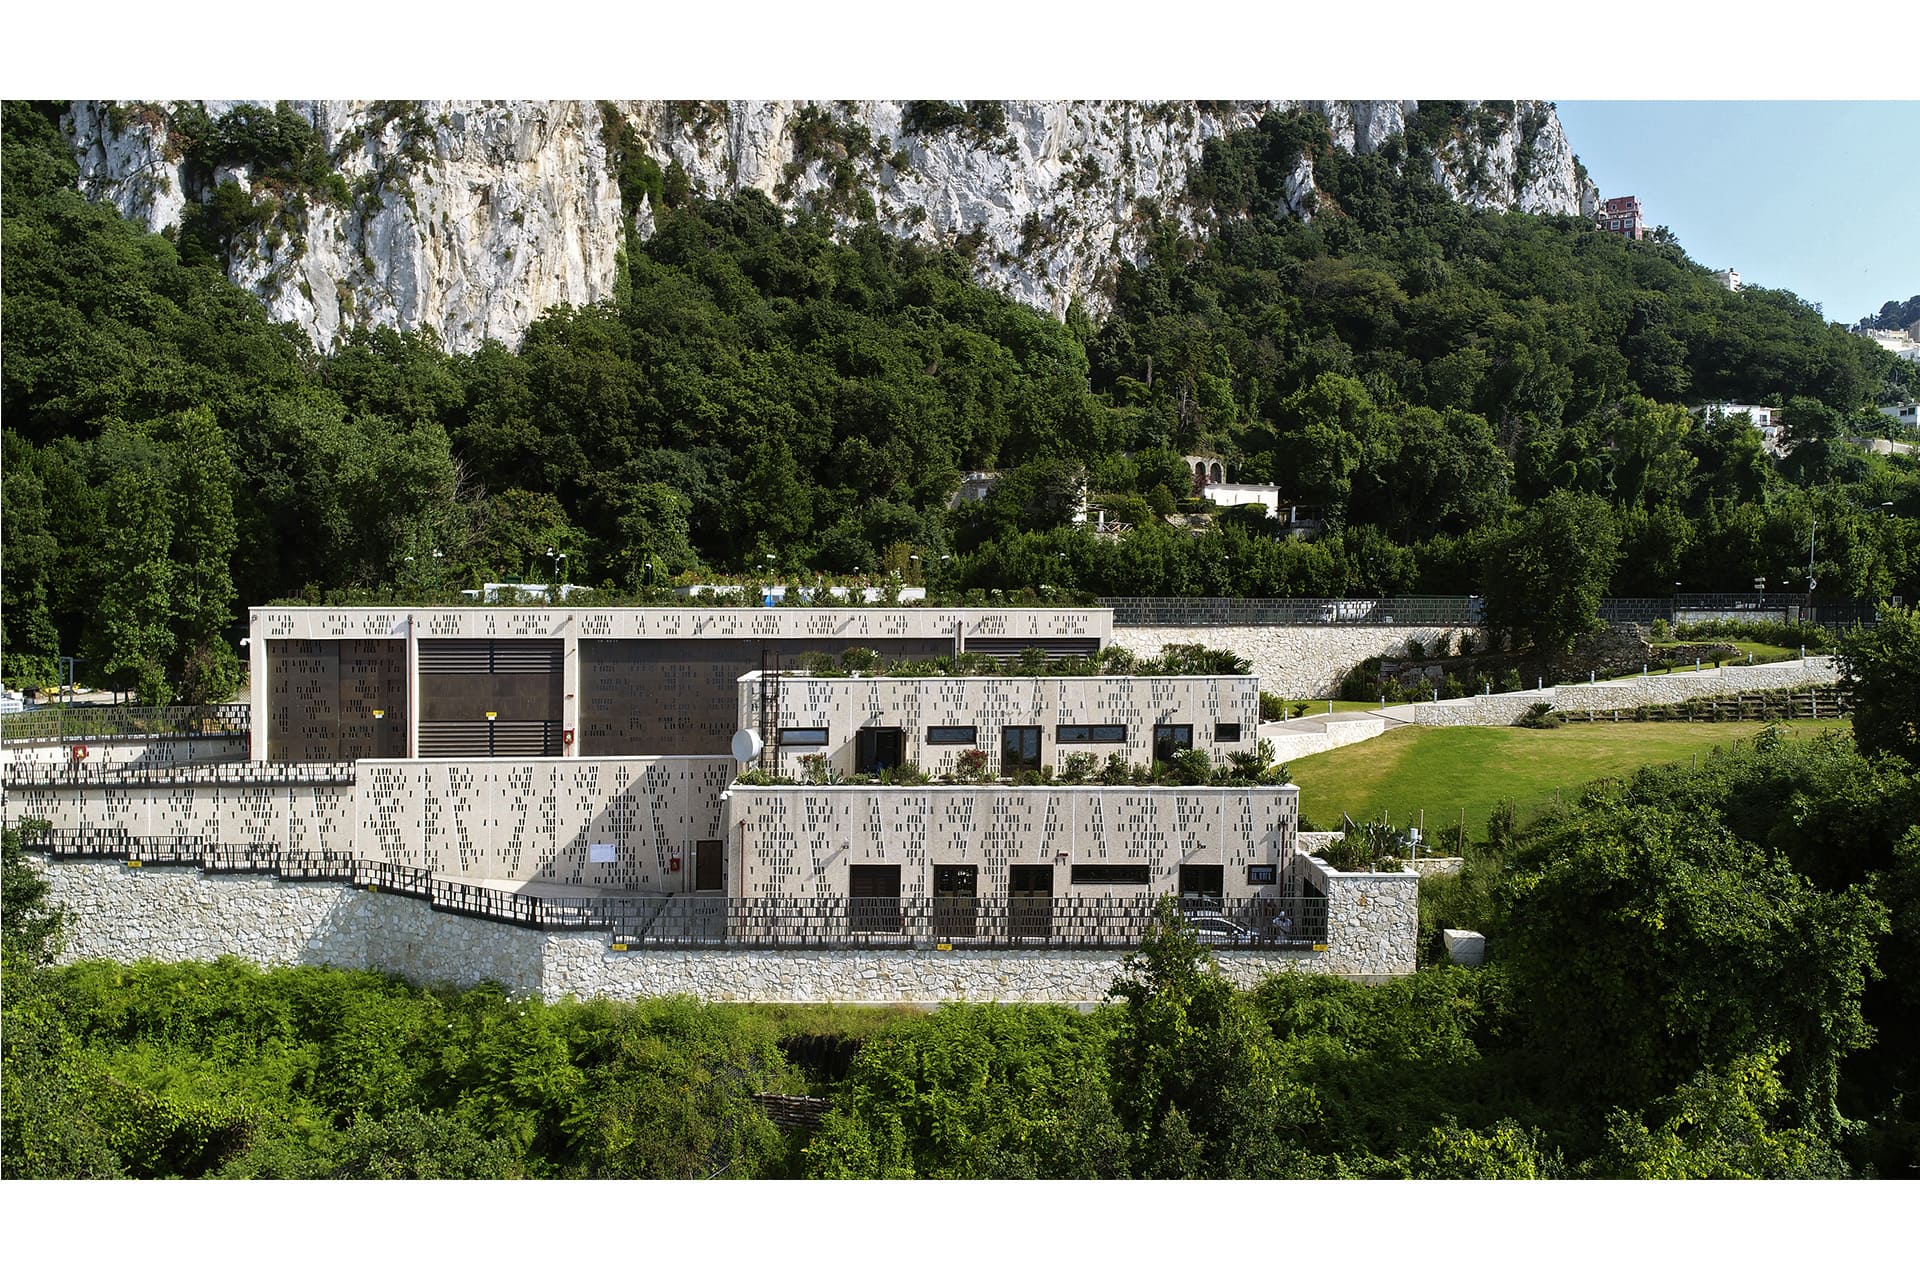 New terna electrical station, Capri (NA), Italy, Frigerio Design Group <br /> Image copyright: @Enrico Cano